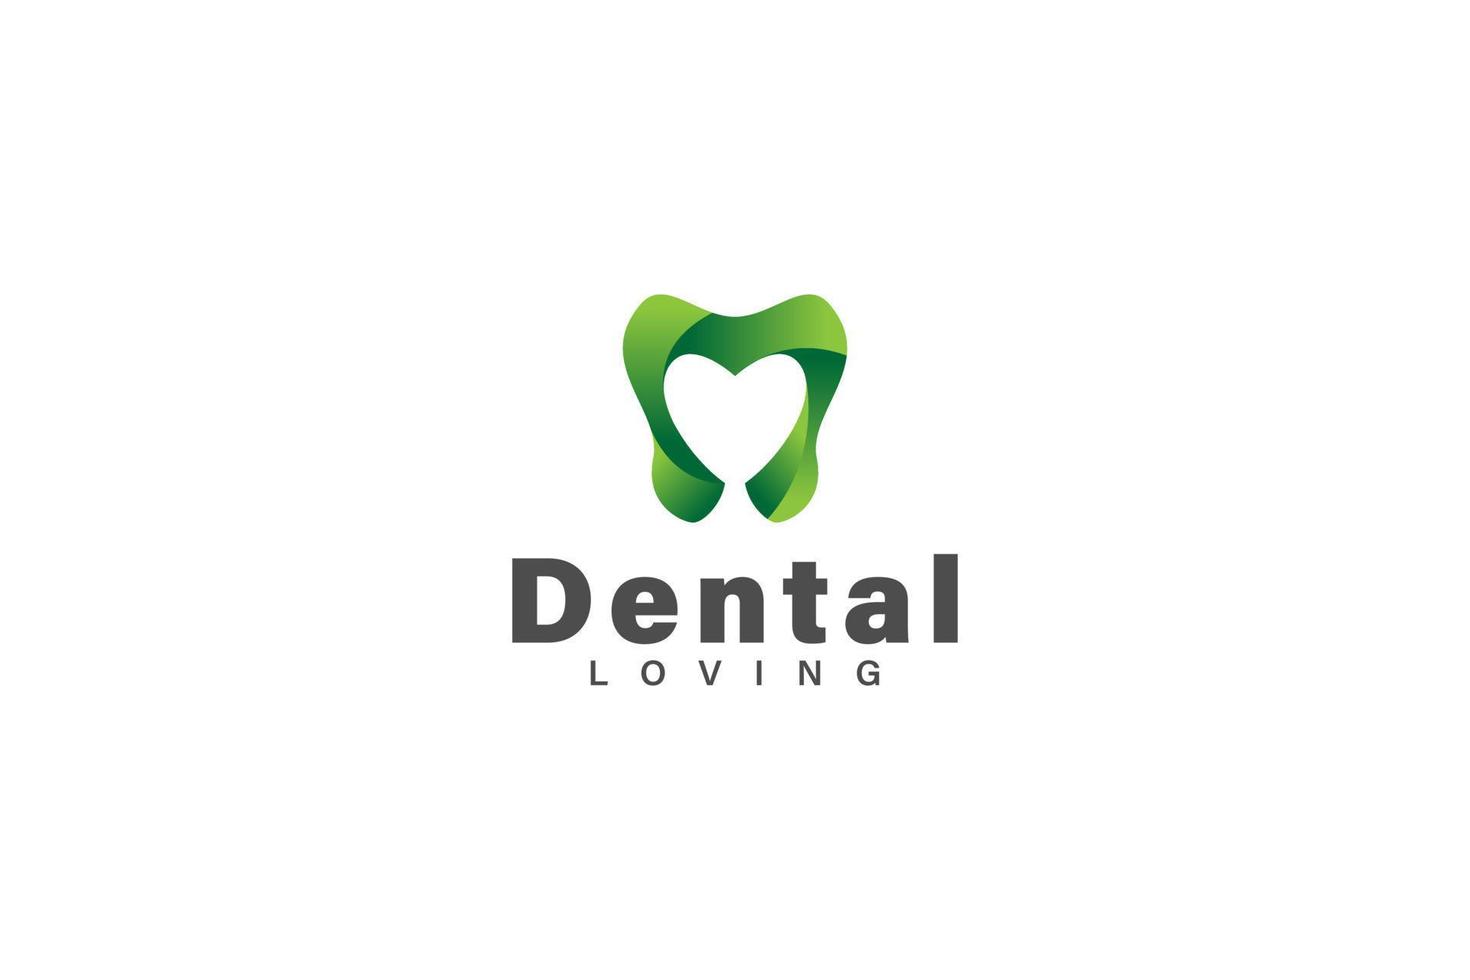 dental amoroso o dental cuidado logo diseño vector